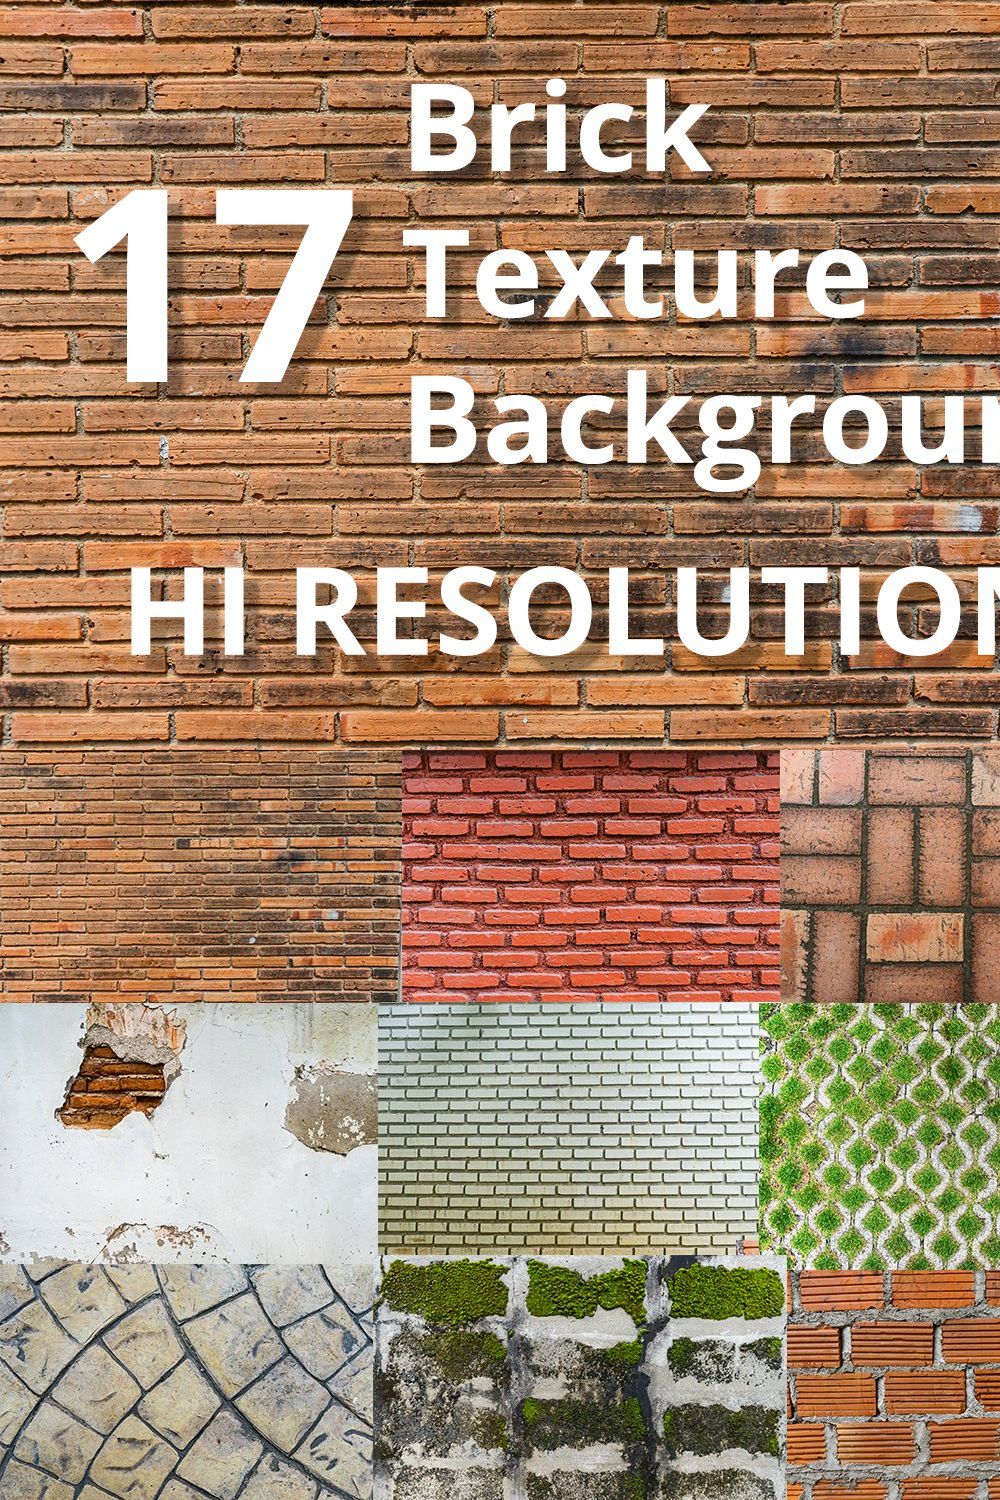 17 Brick texture background (Brick2) pinterest preview image.